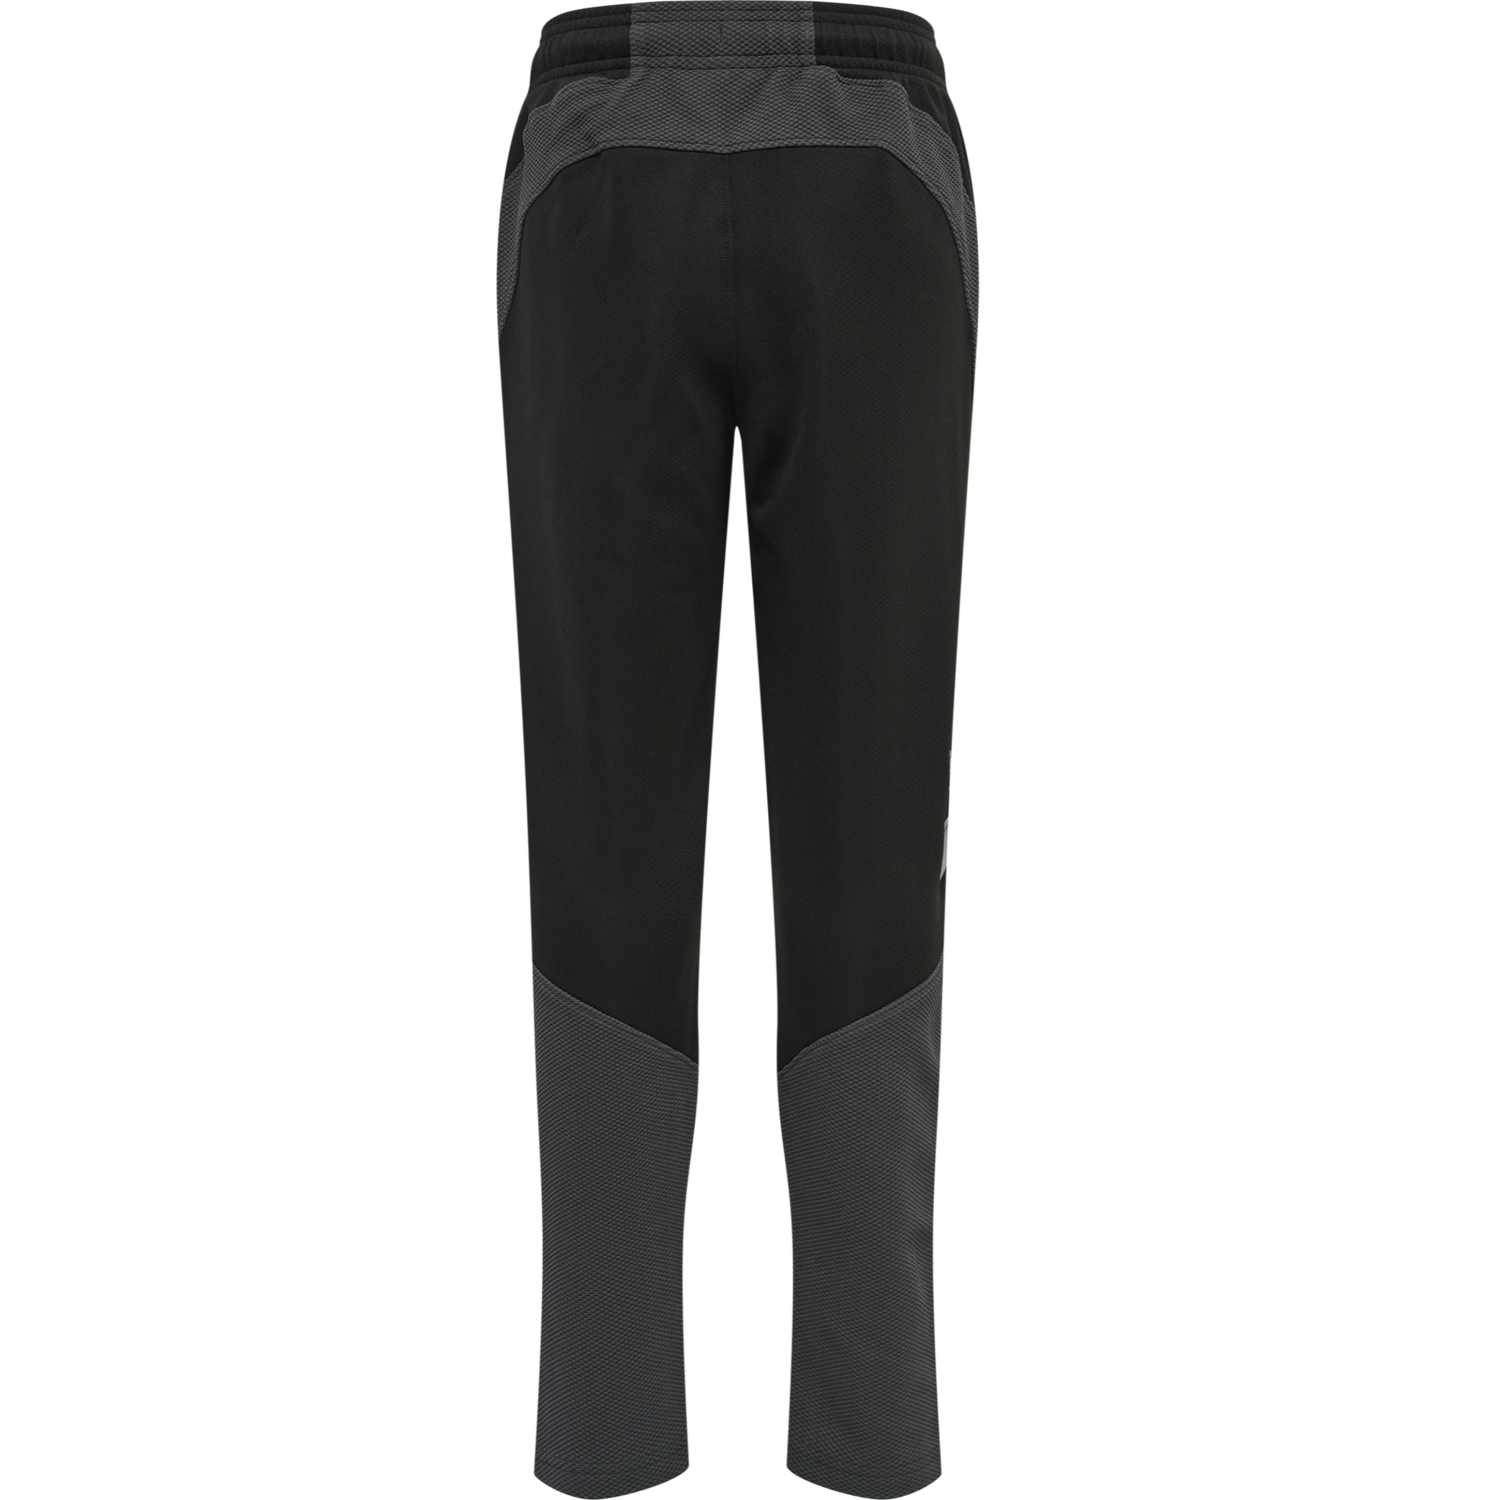 Jogginghose Komfort Hose für Sport & Fitness Hummel Baumwoll-Sporthose Herren lang Fitnesshose in Schwarz CORE COTTON PANT Laufhose mit 320 g/m2